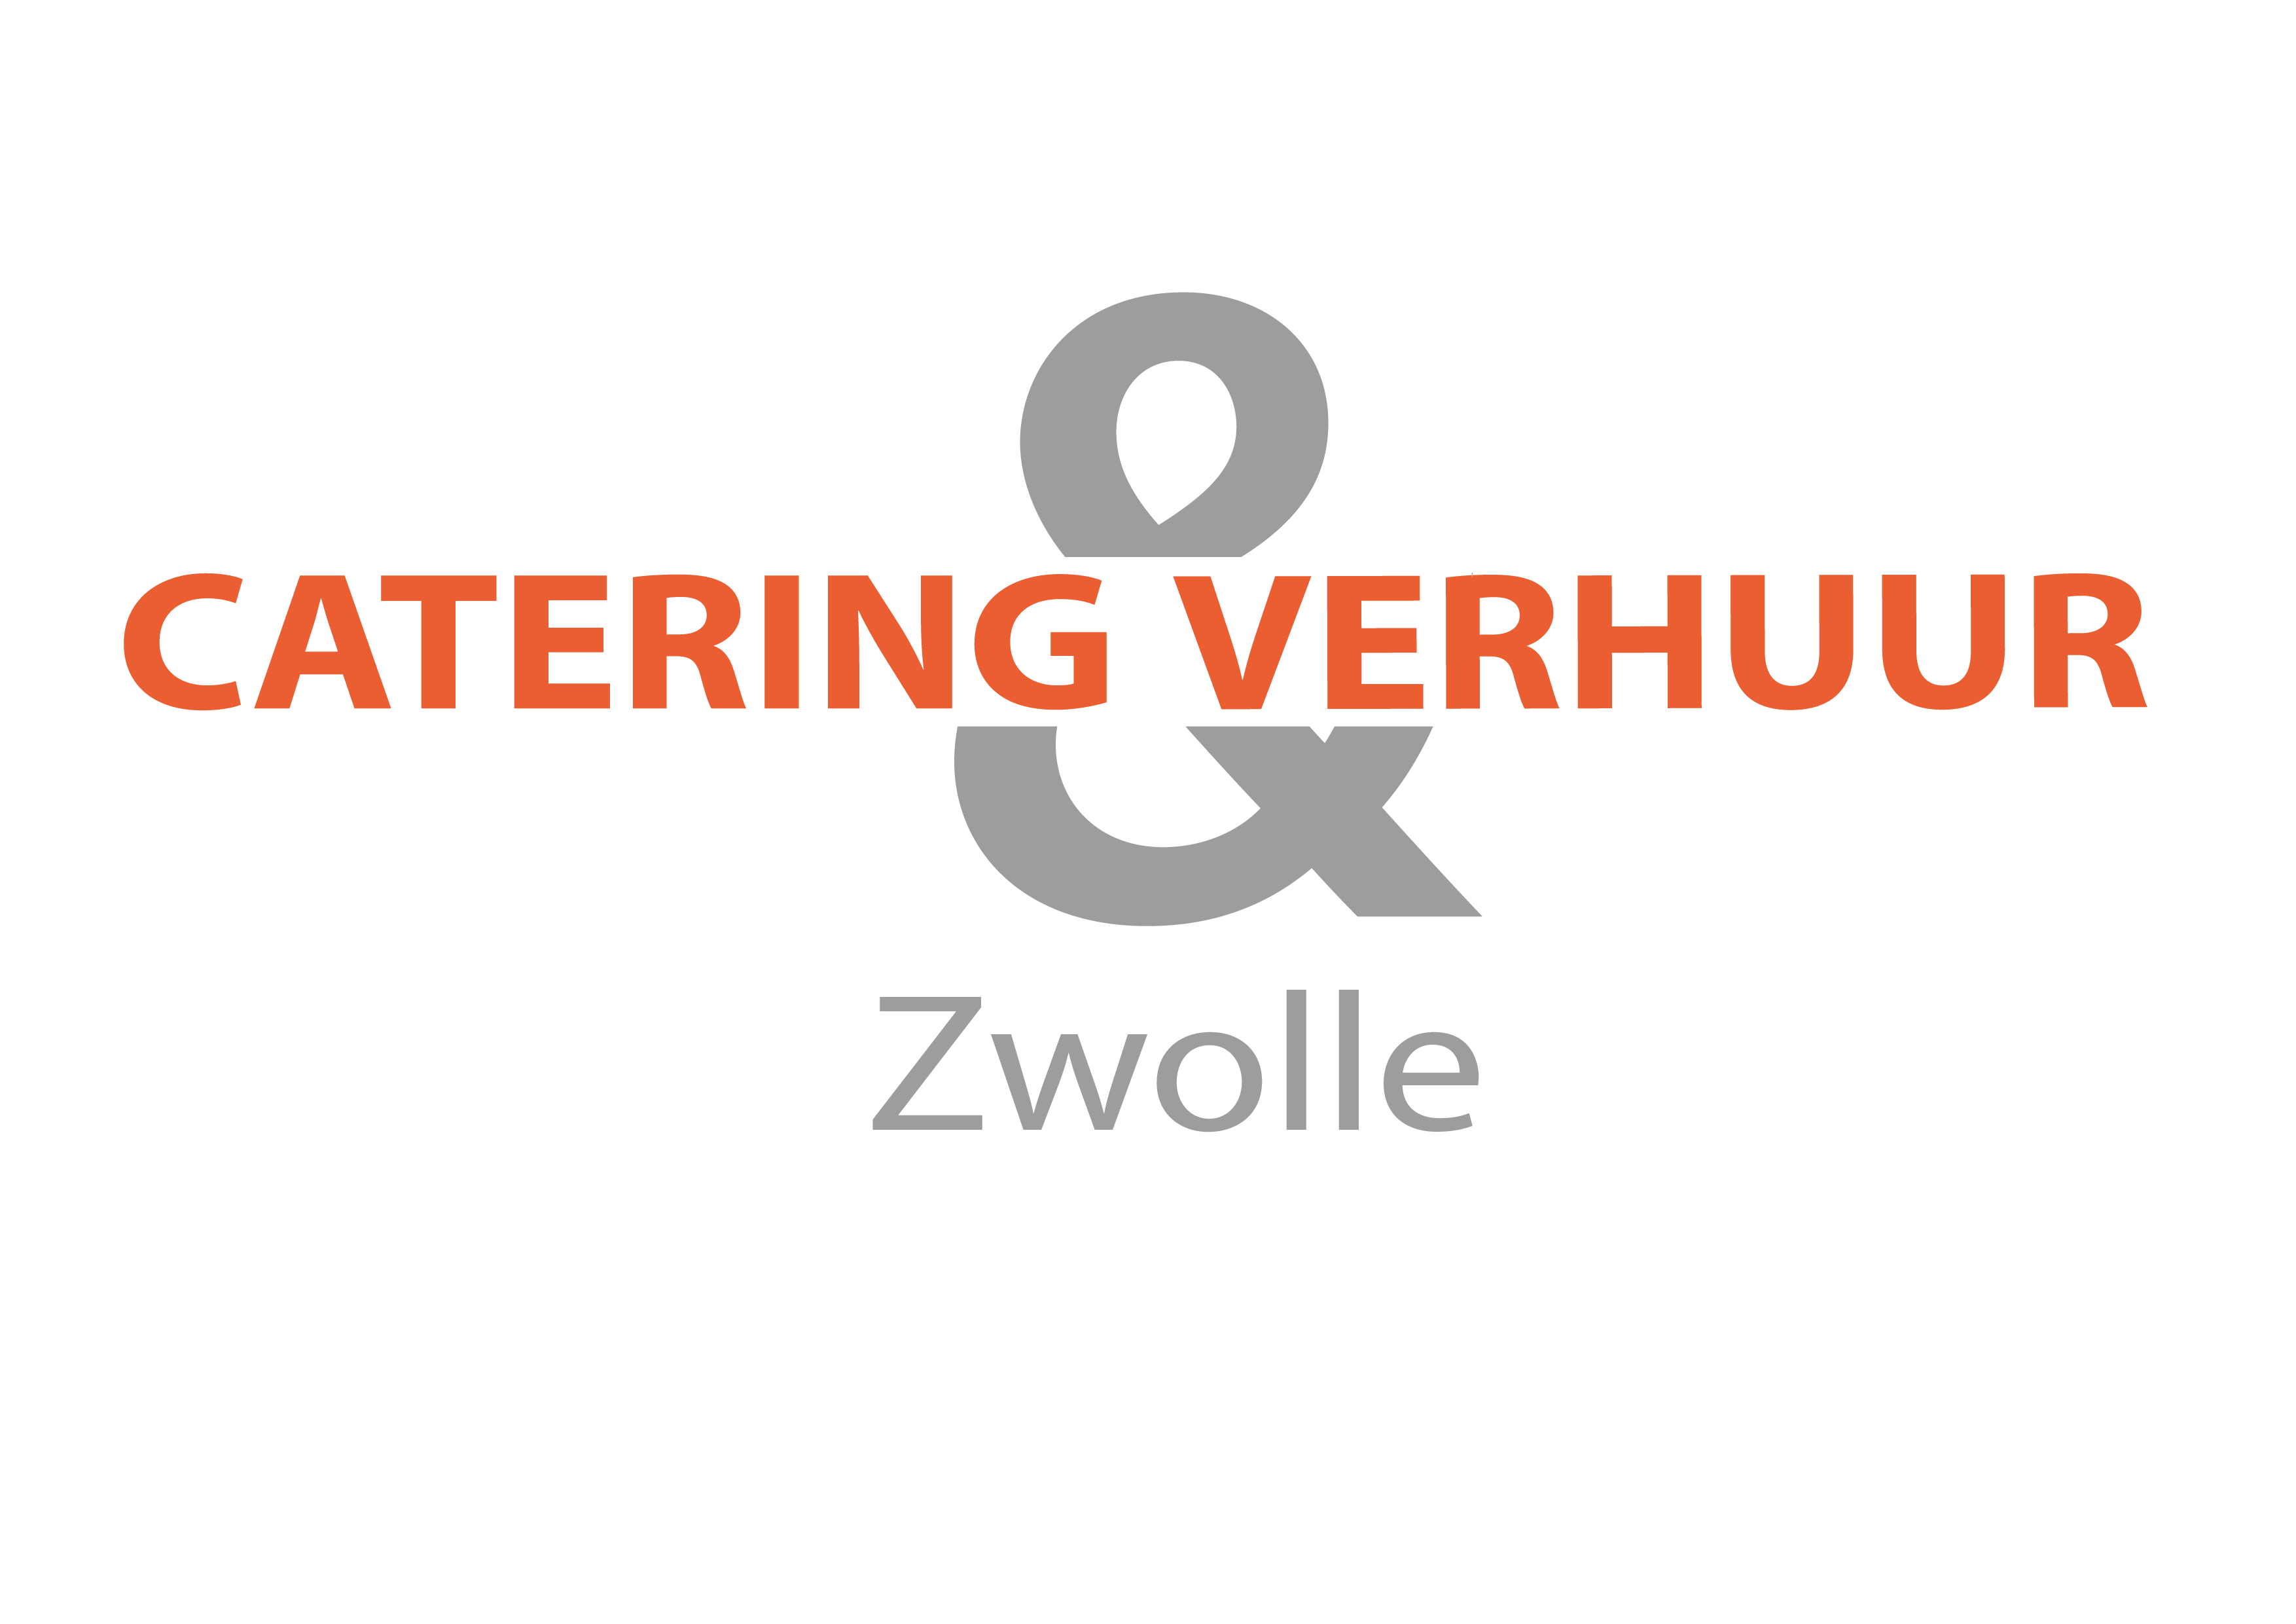 Catering & Verhuur Zwolle